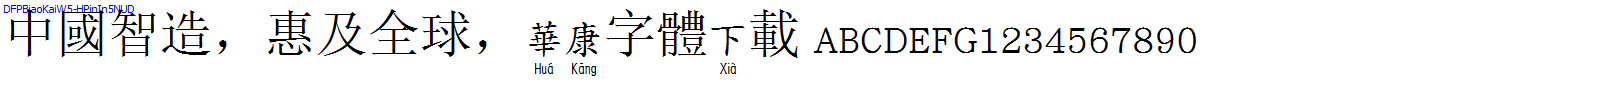 華康字體DFPBiaoKaiW5-HPinIn5NUD.TTF